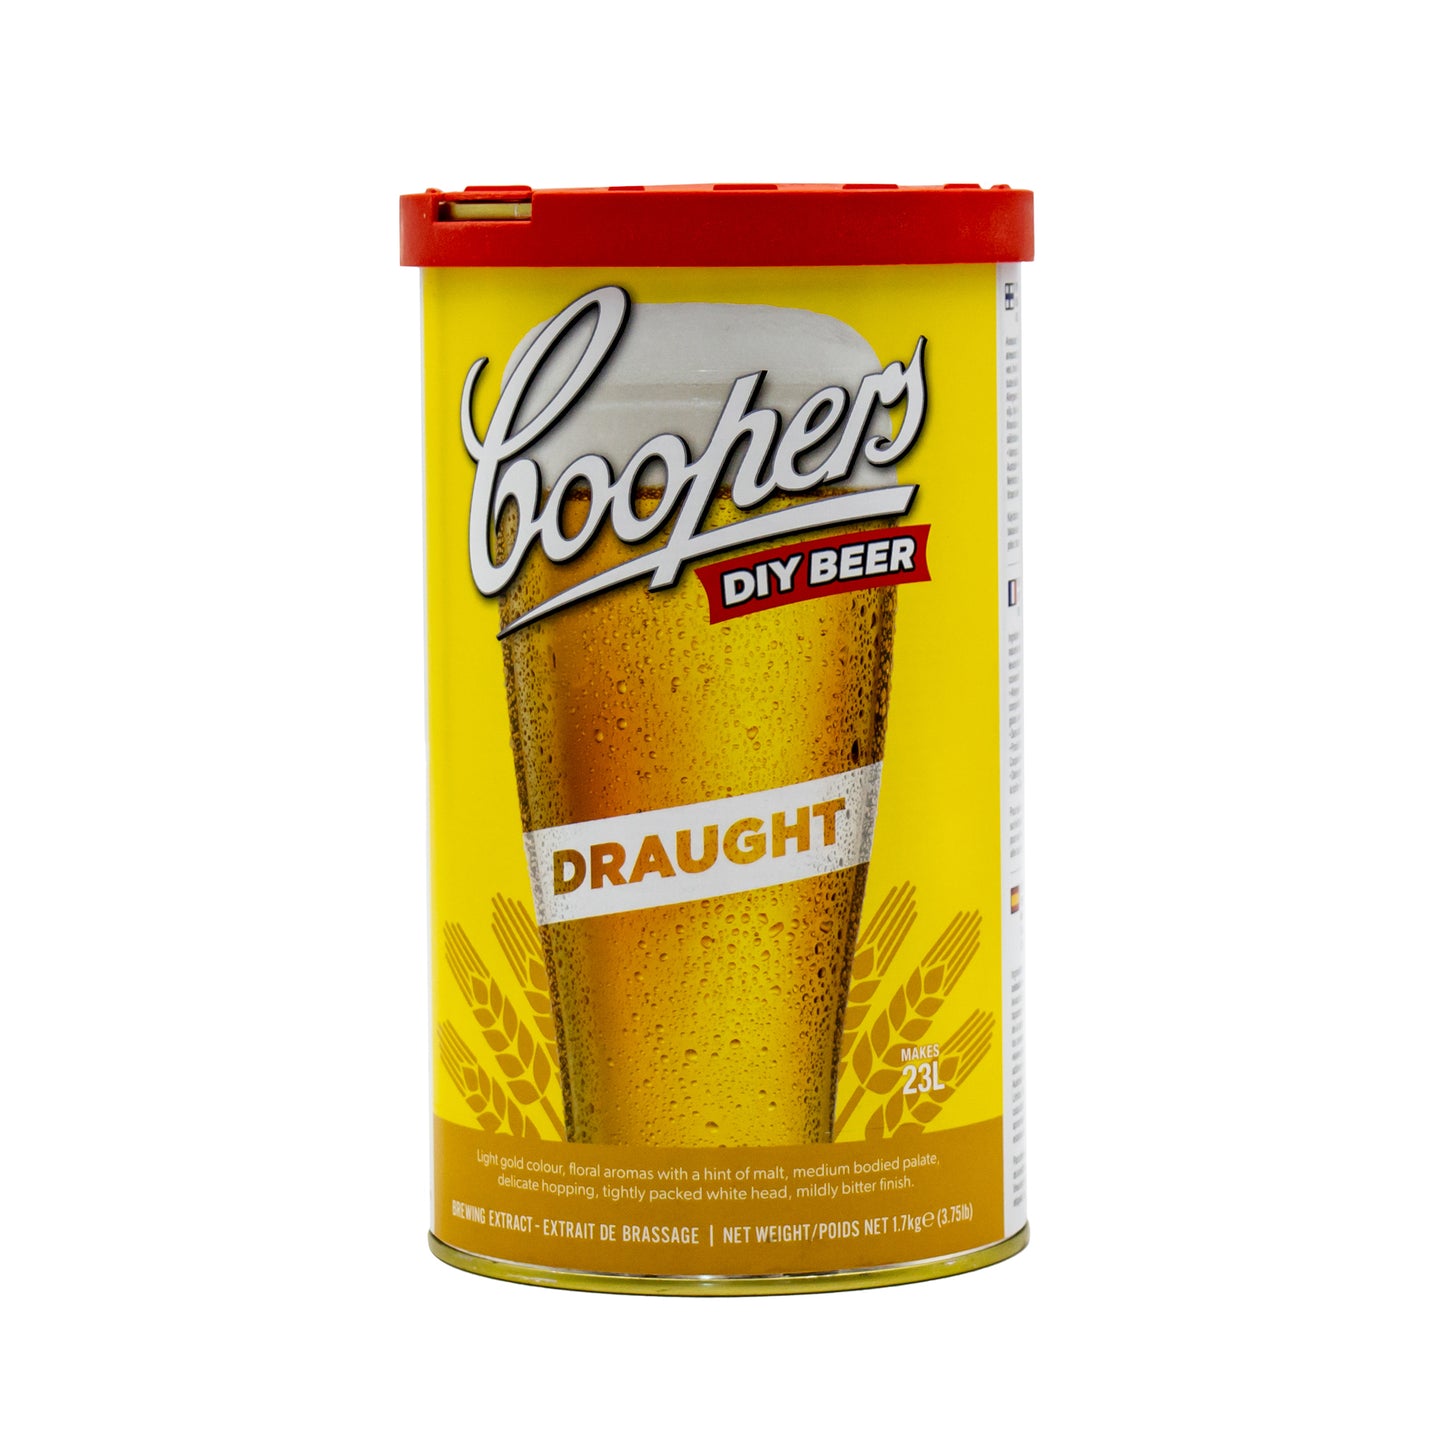 coopers original series draught beer tin